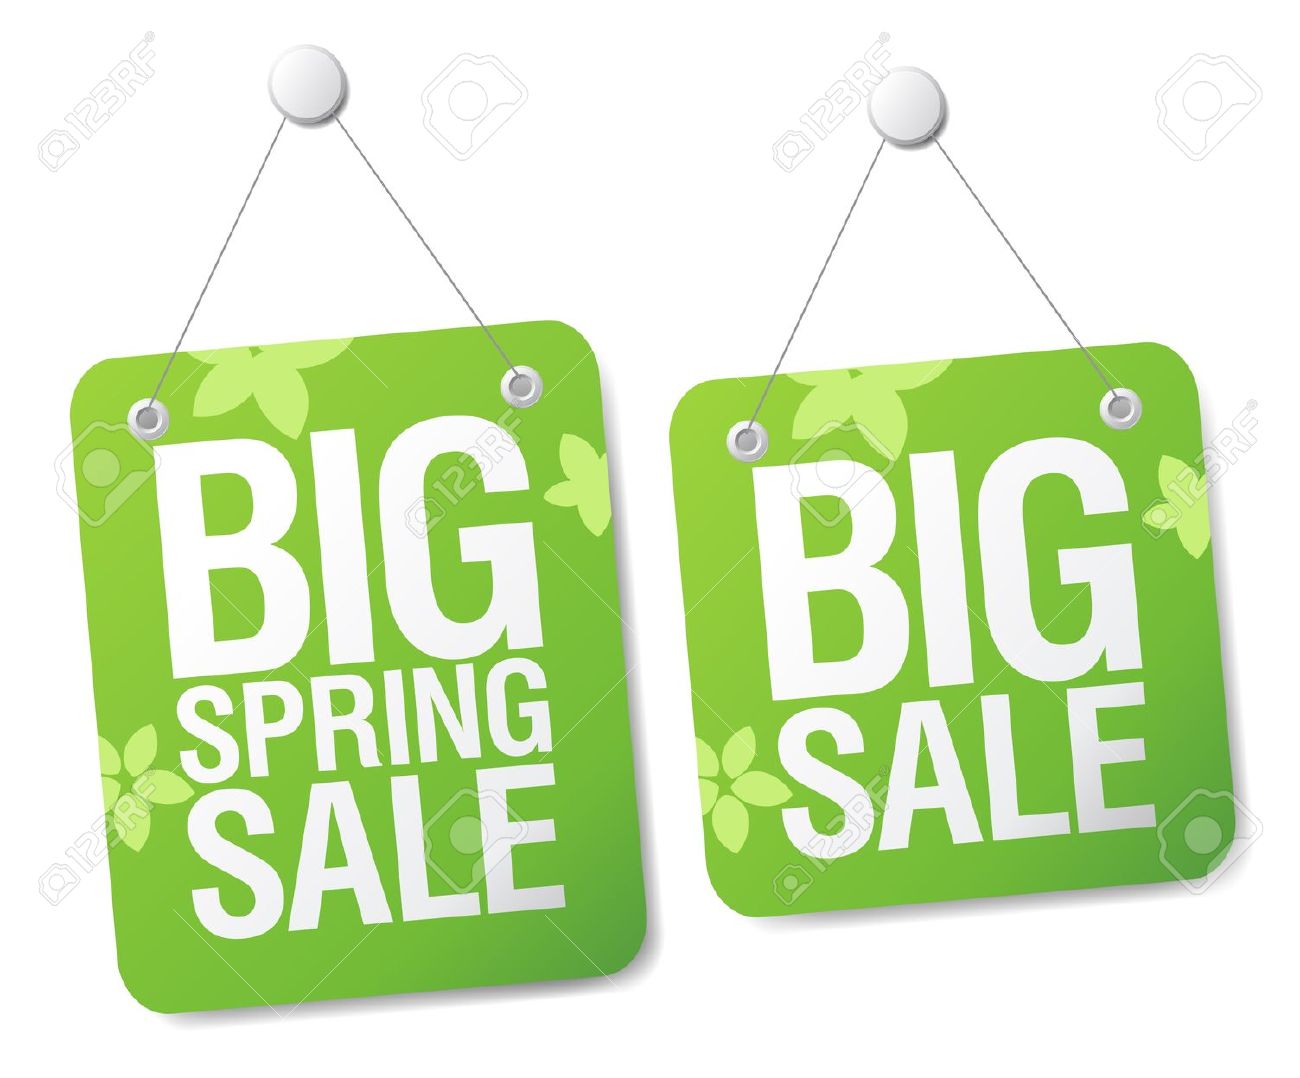 9334445-Big-spring-sale-signs-set--Stock-Vector-promotion